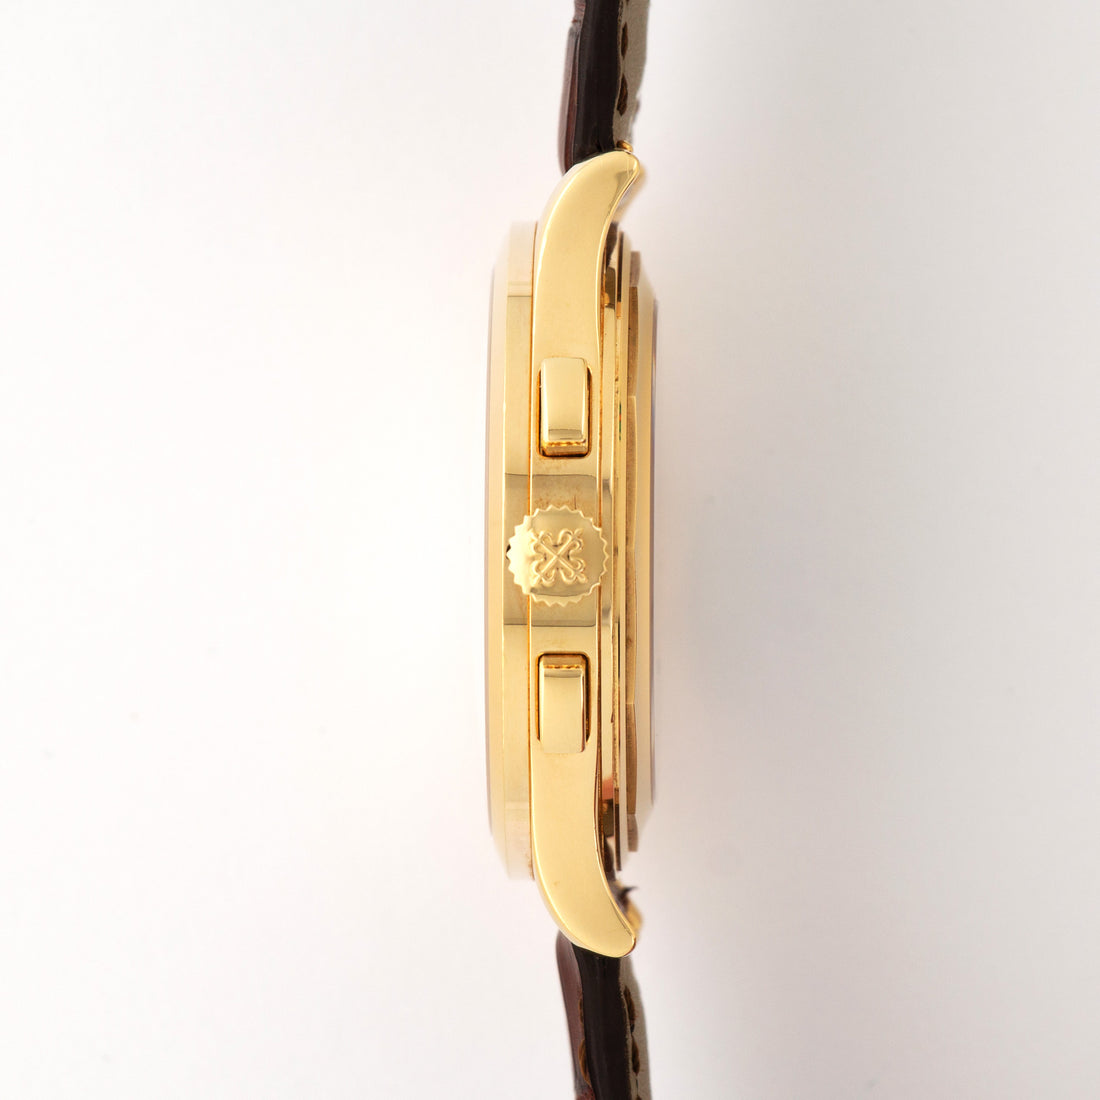 Patek Philippe Yellow Gold Chronograph Watch, Ref. 5170